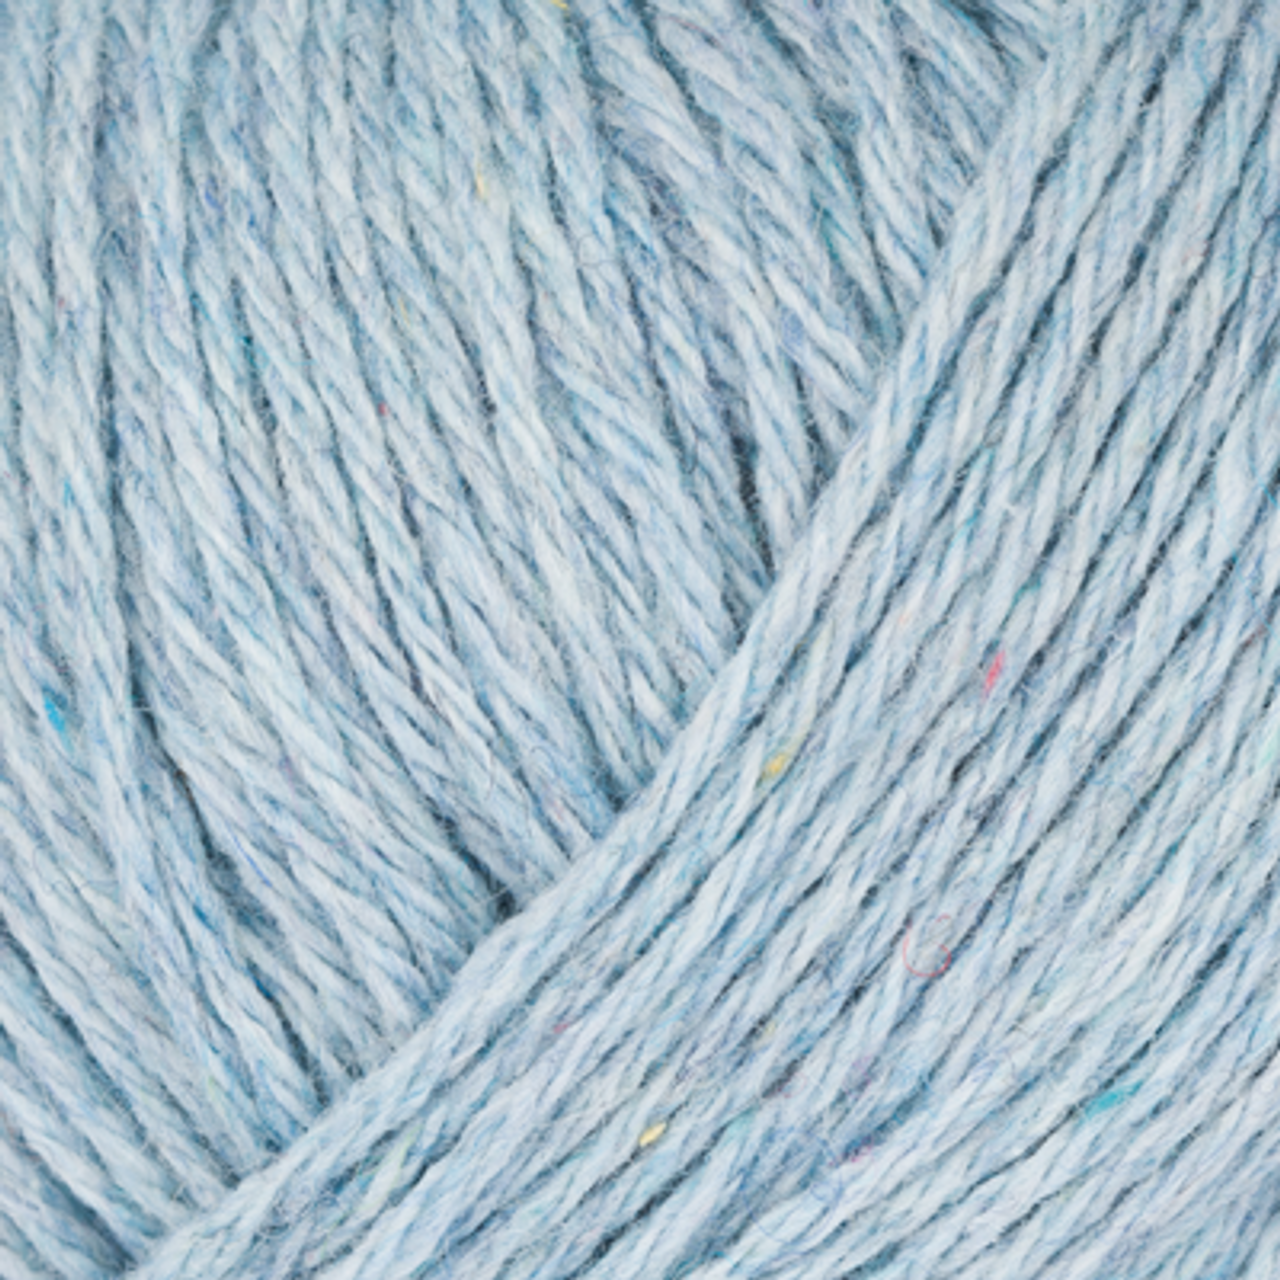 ReCreate 100% Recycled Yarn - Sky Double Knitting Yarn - (100g) 40% Wool- 30% Acrylic